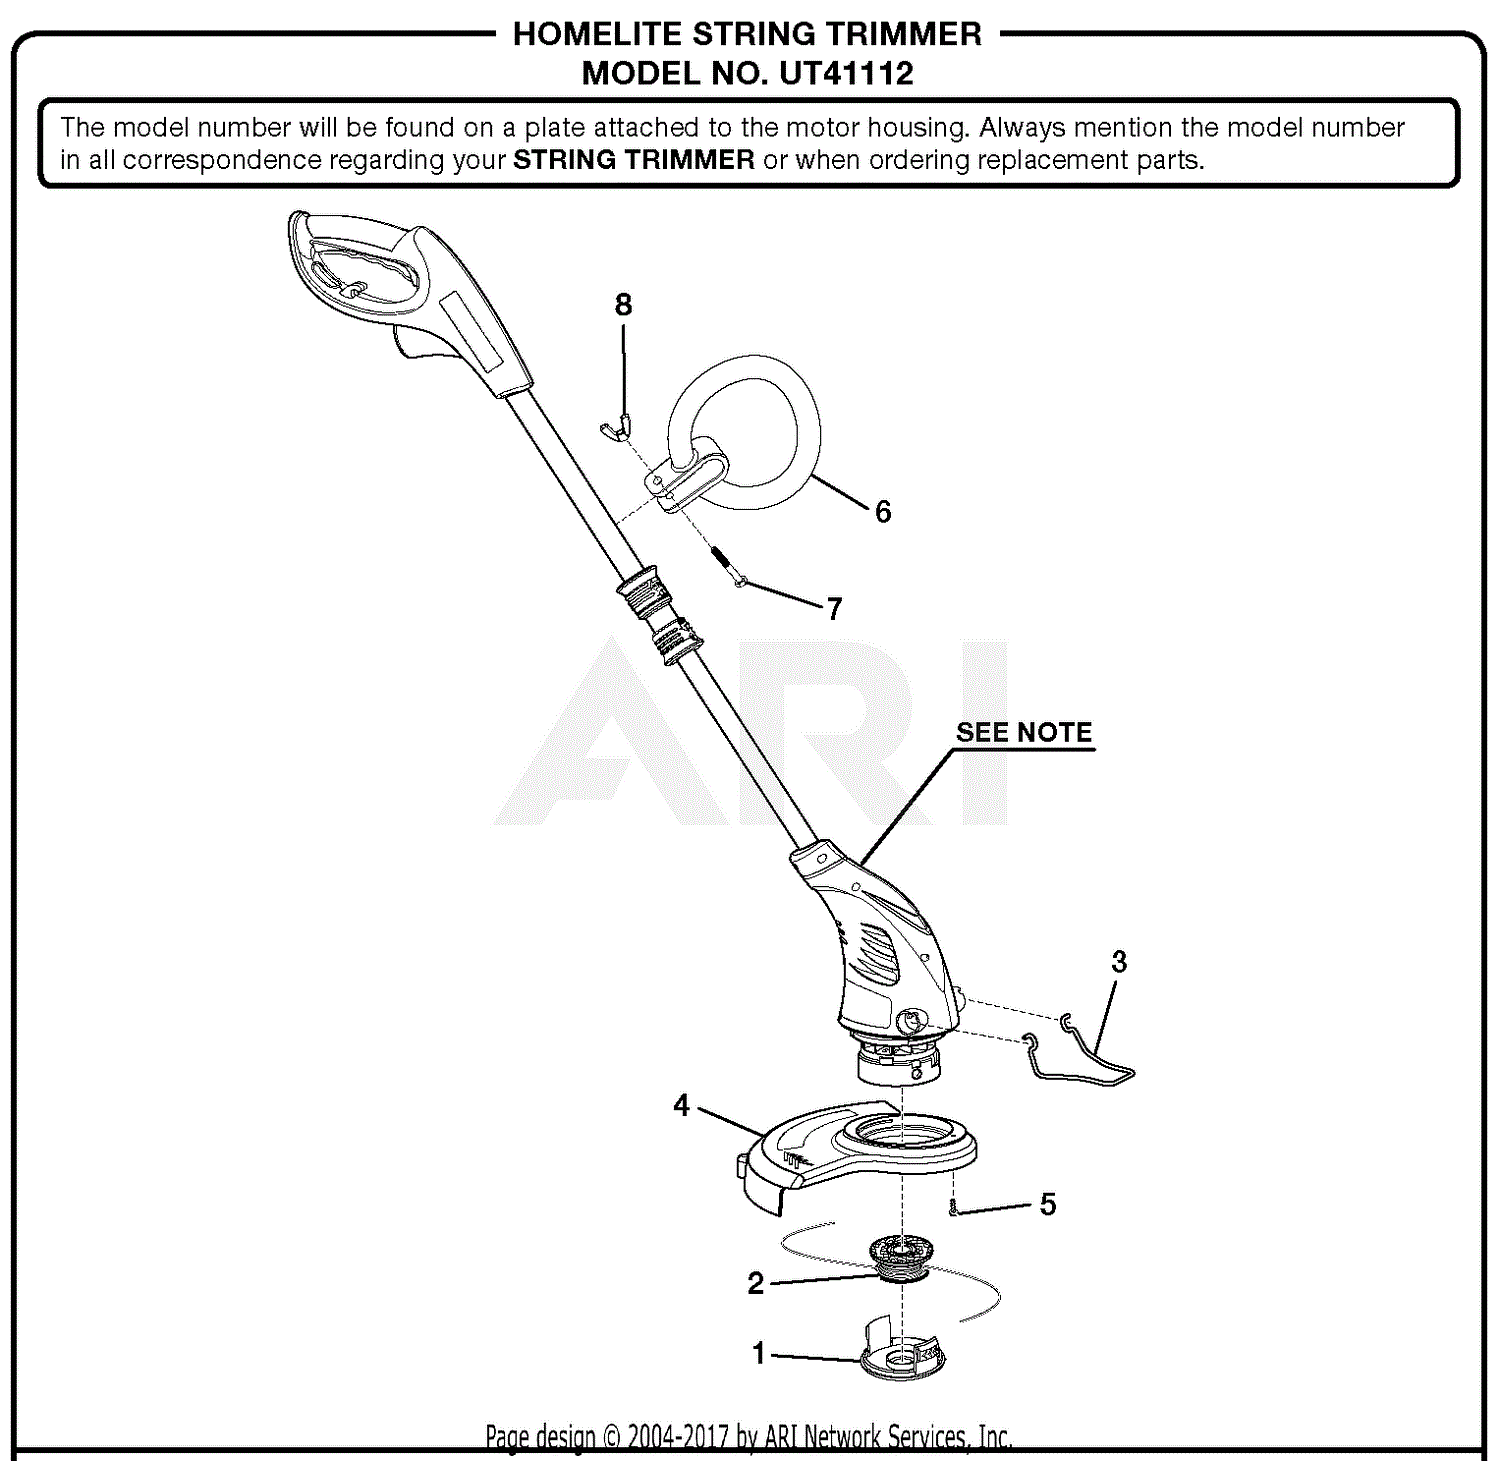 Homelite UT41112 String Trimmer Parts Diagram for General Assembly